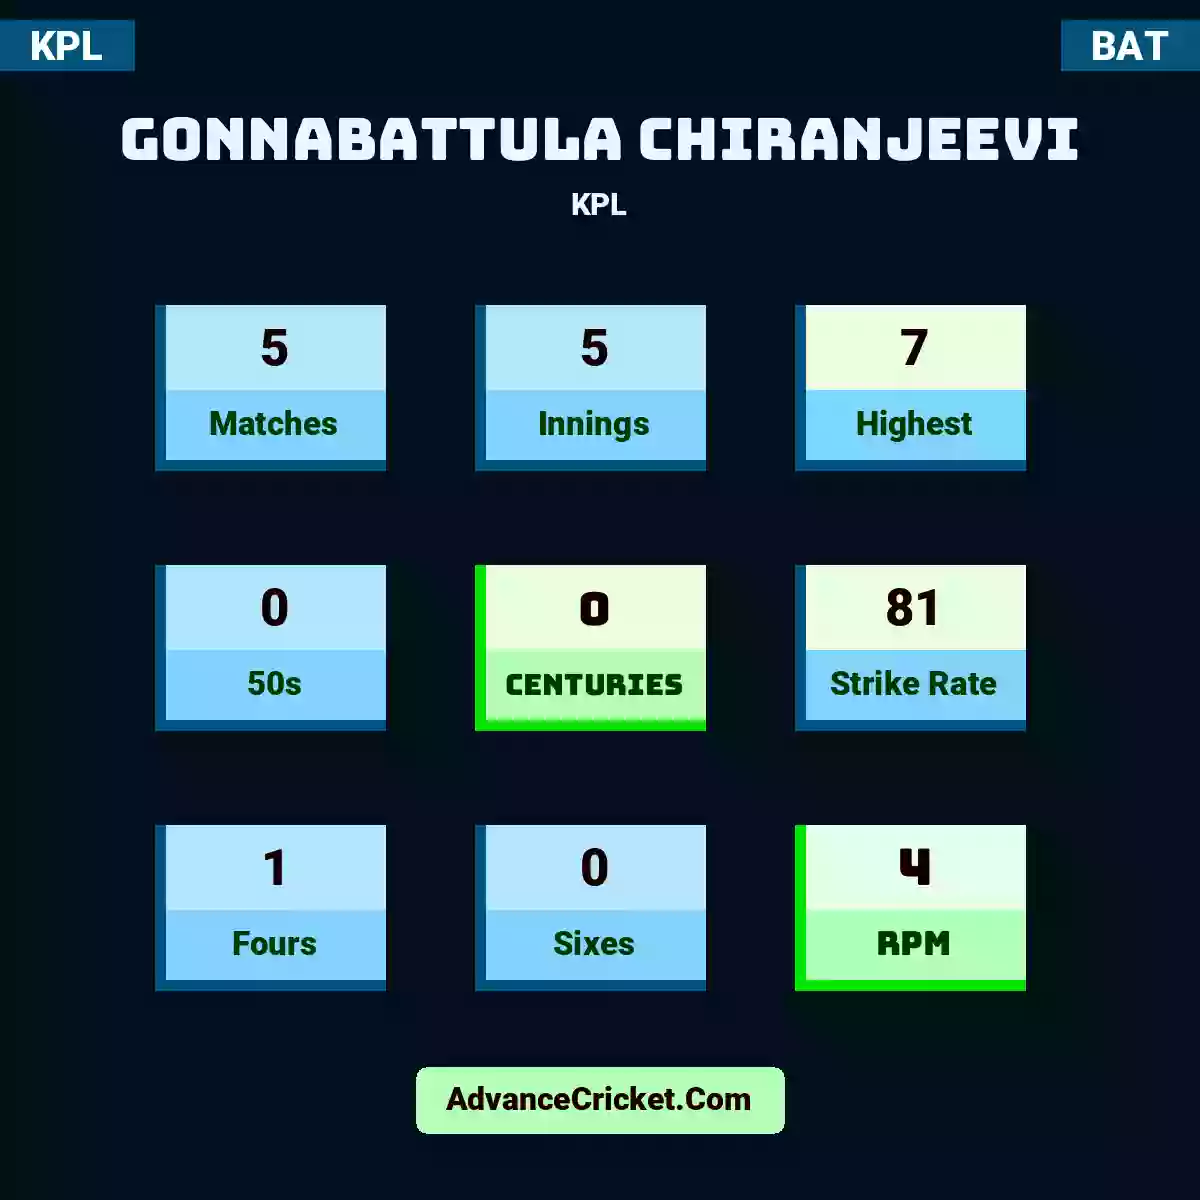 Gonnabattula Chiranjeevi KPL , Gonnabattula Chiranjeevi played 5 matches, scored 7 runs as highest, 0 half-centuries, and 0 centuries, with a strike rate of 81. G.Chiranjeevi hit 1 fours and 0 sixes, with an RPM of 4.